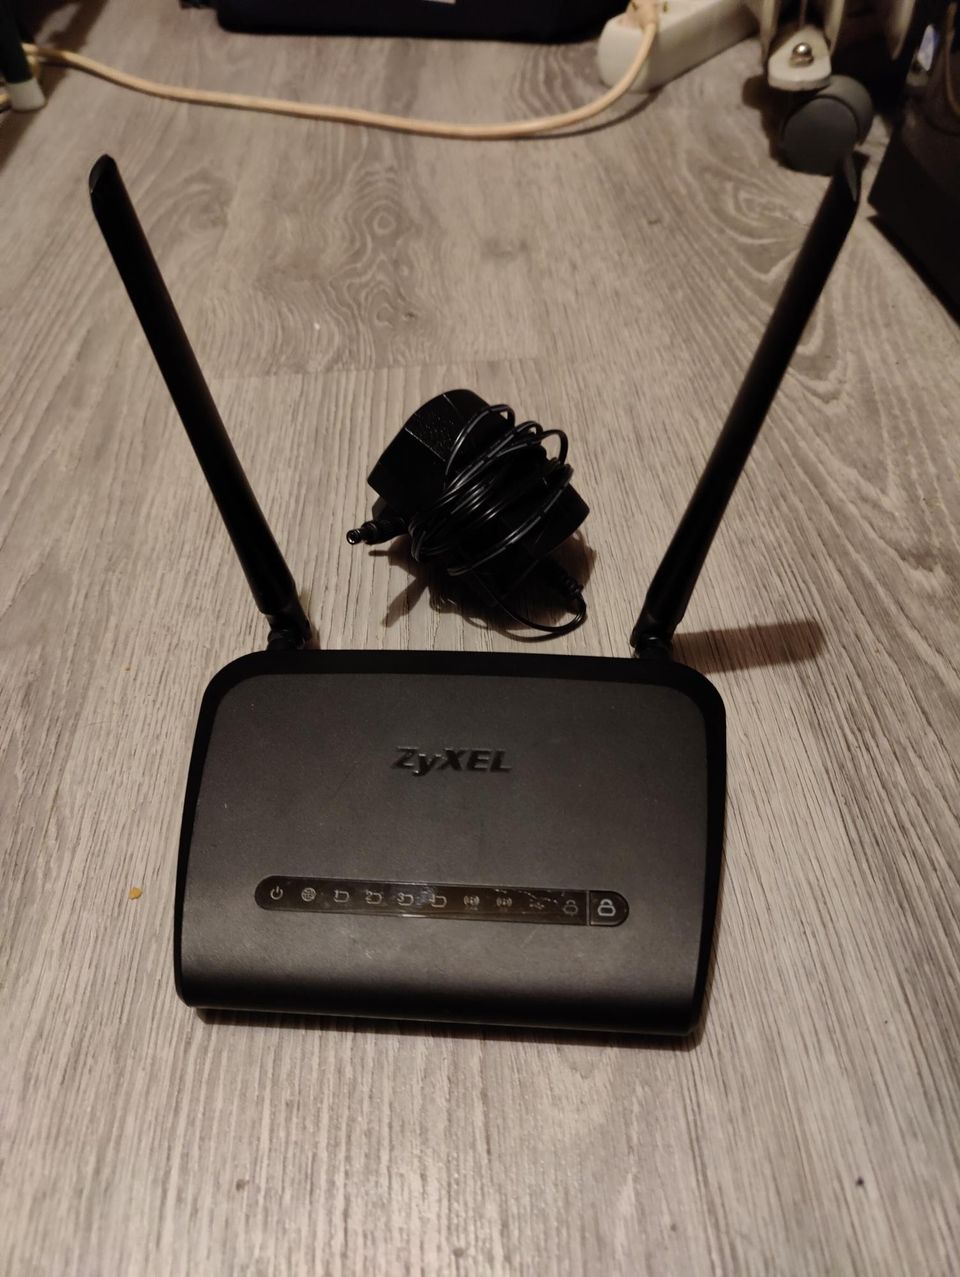 Zyxel NBG 6515 reititin ja 5 GHz wifi